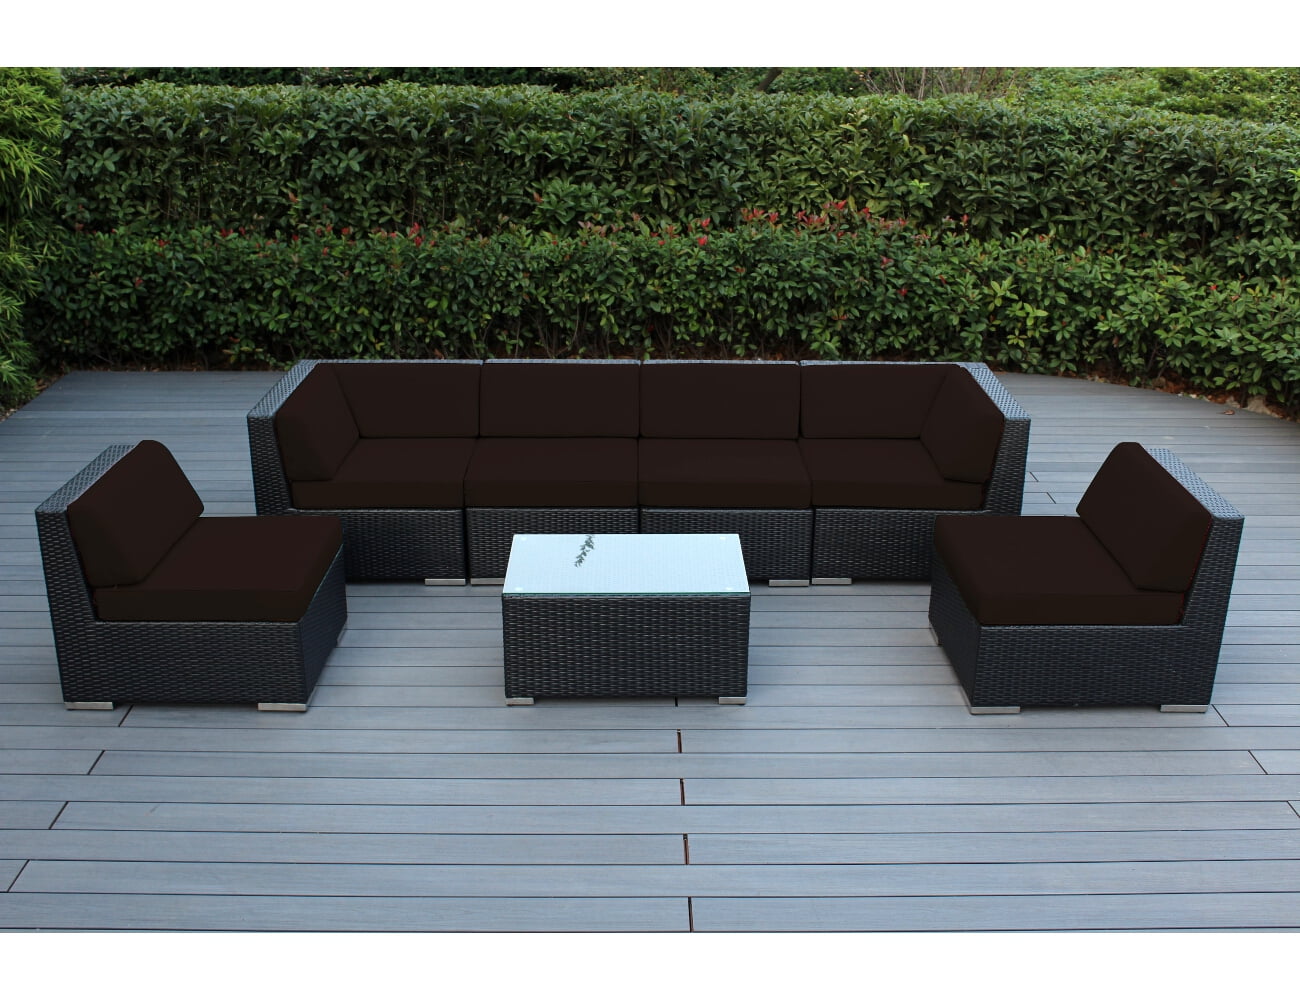 Ohana 7 Piece Outdoor Wicker Patio Furniture Sectional Conversation Set - Black Wicker